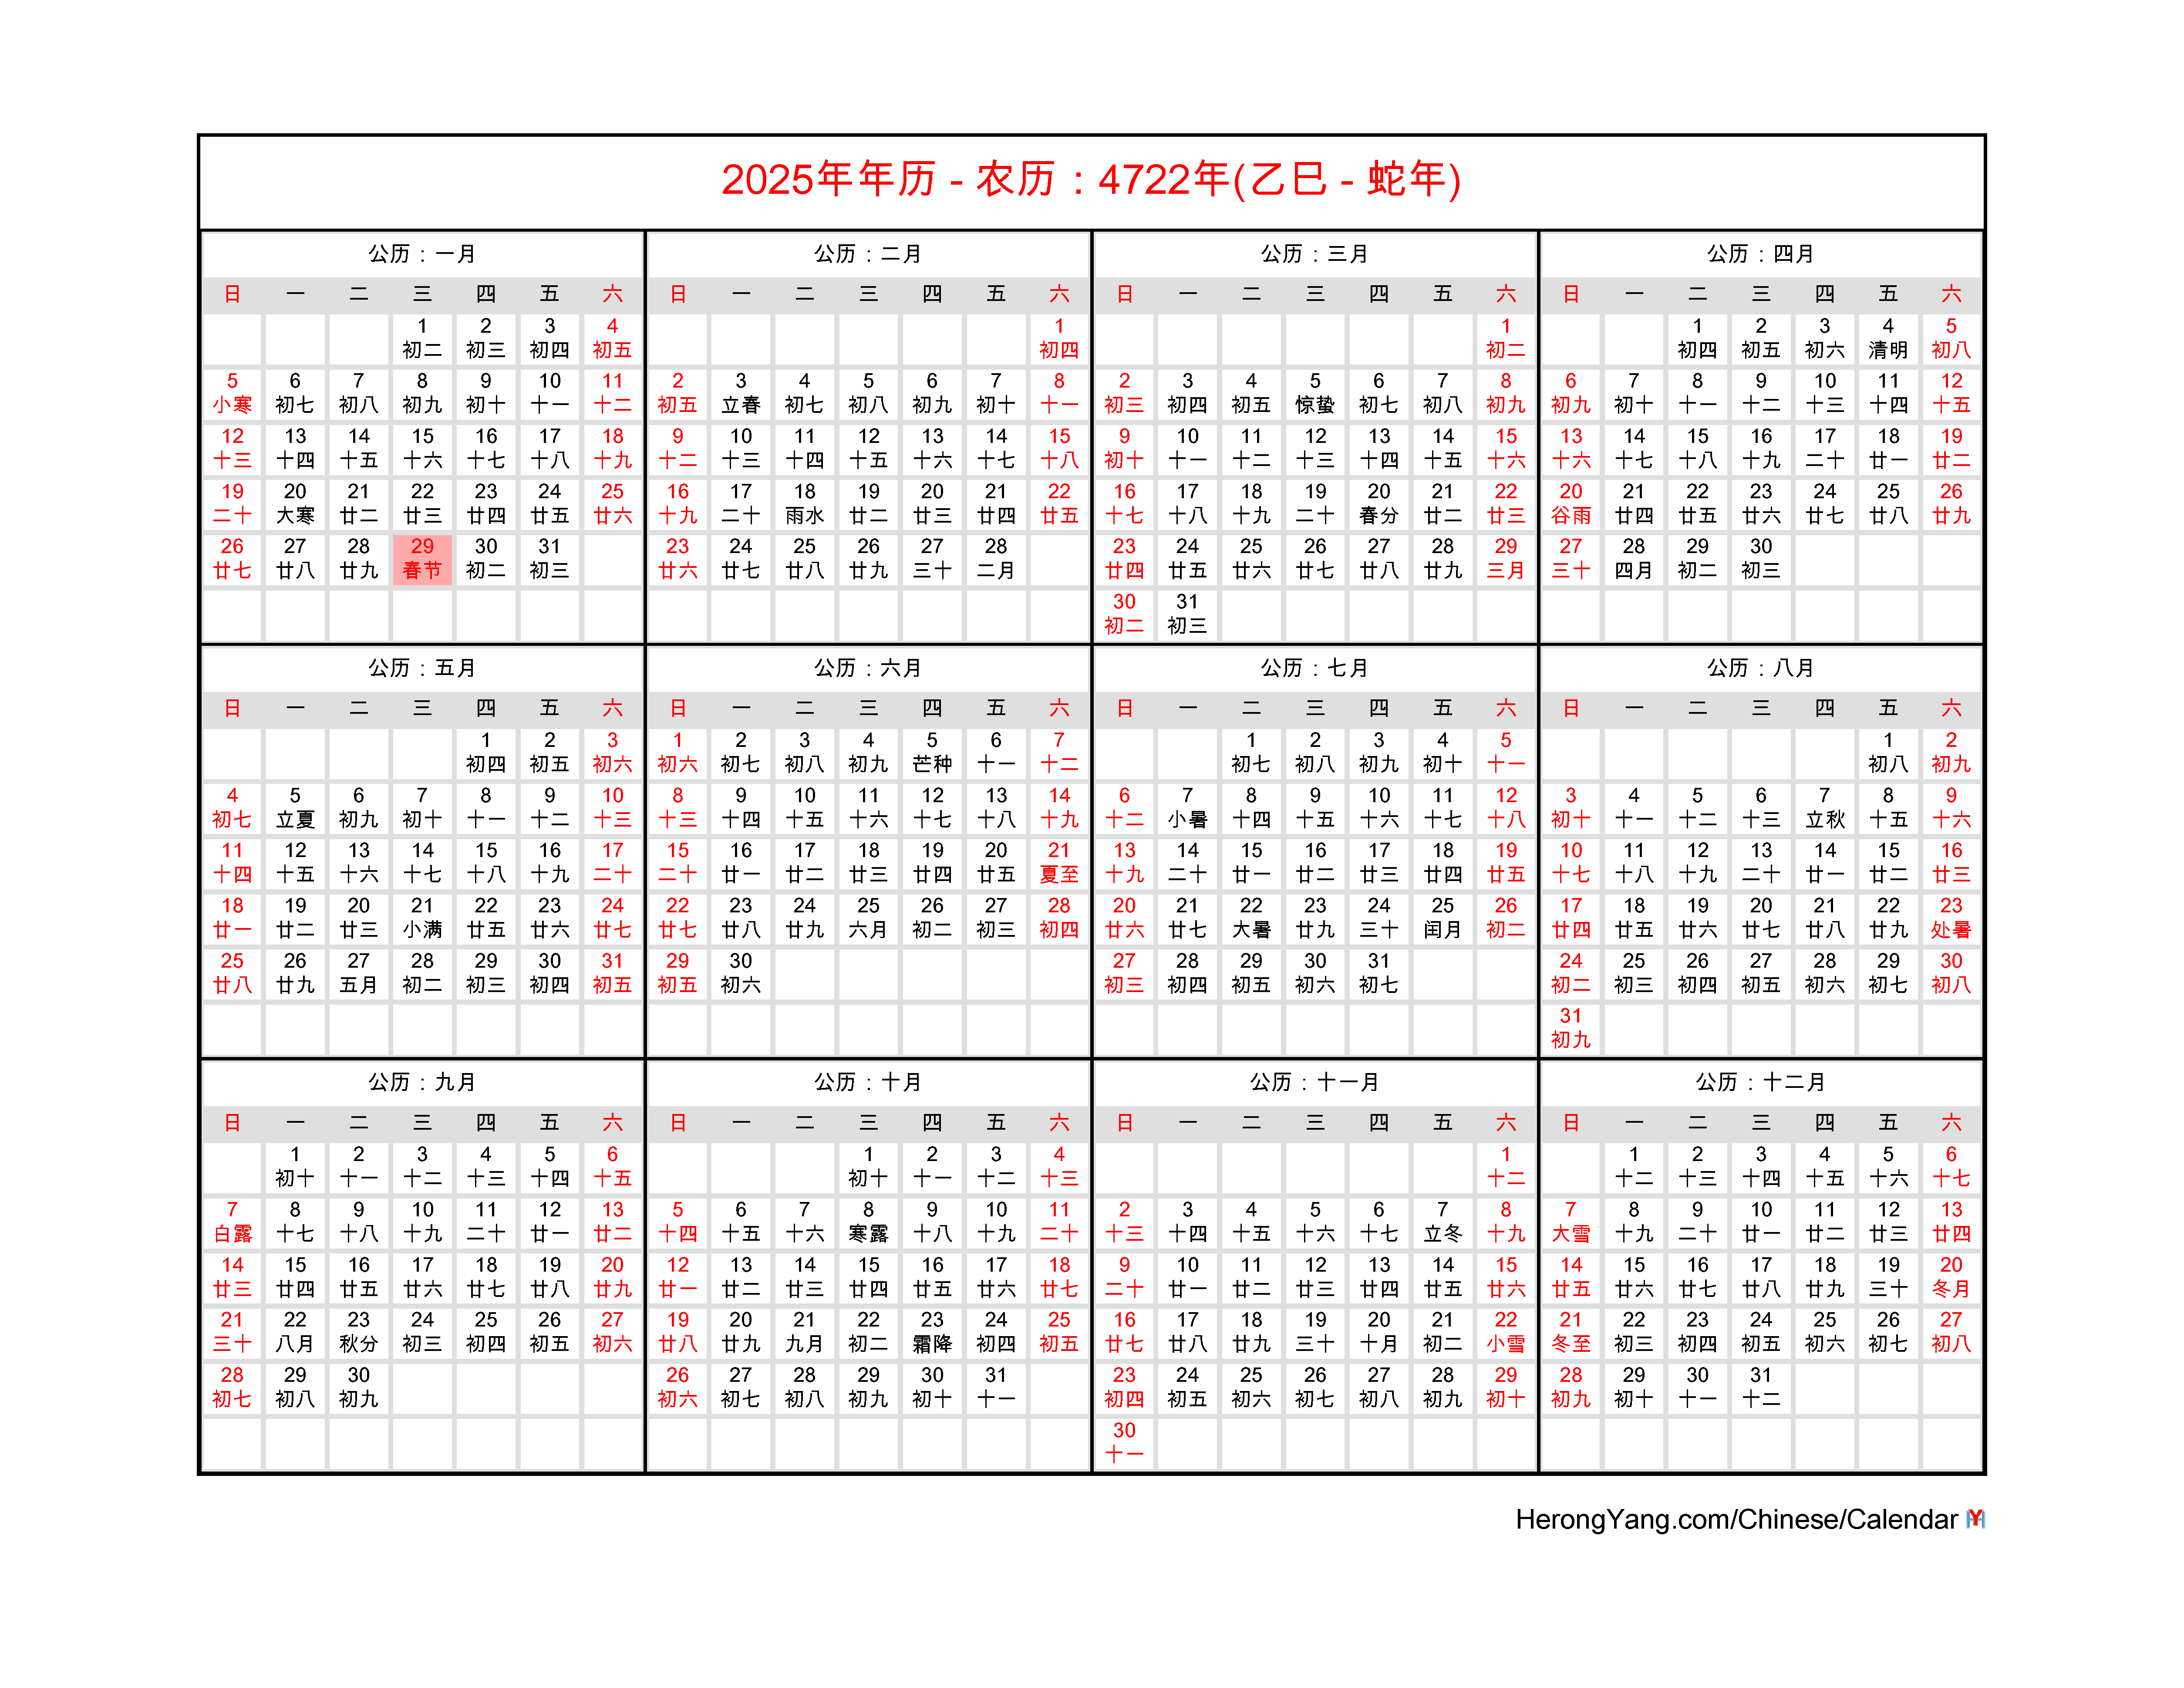 2025 Lunar Calendar New Year 2025 Date - Kalie Marilin